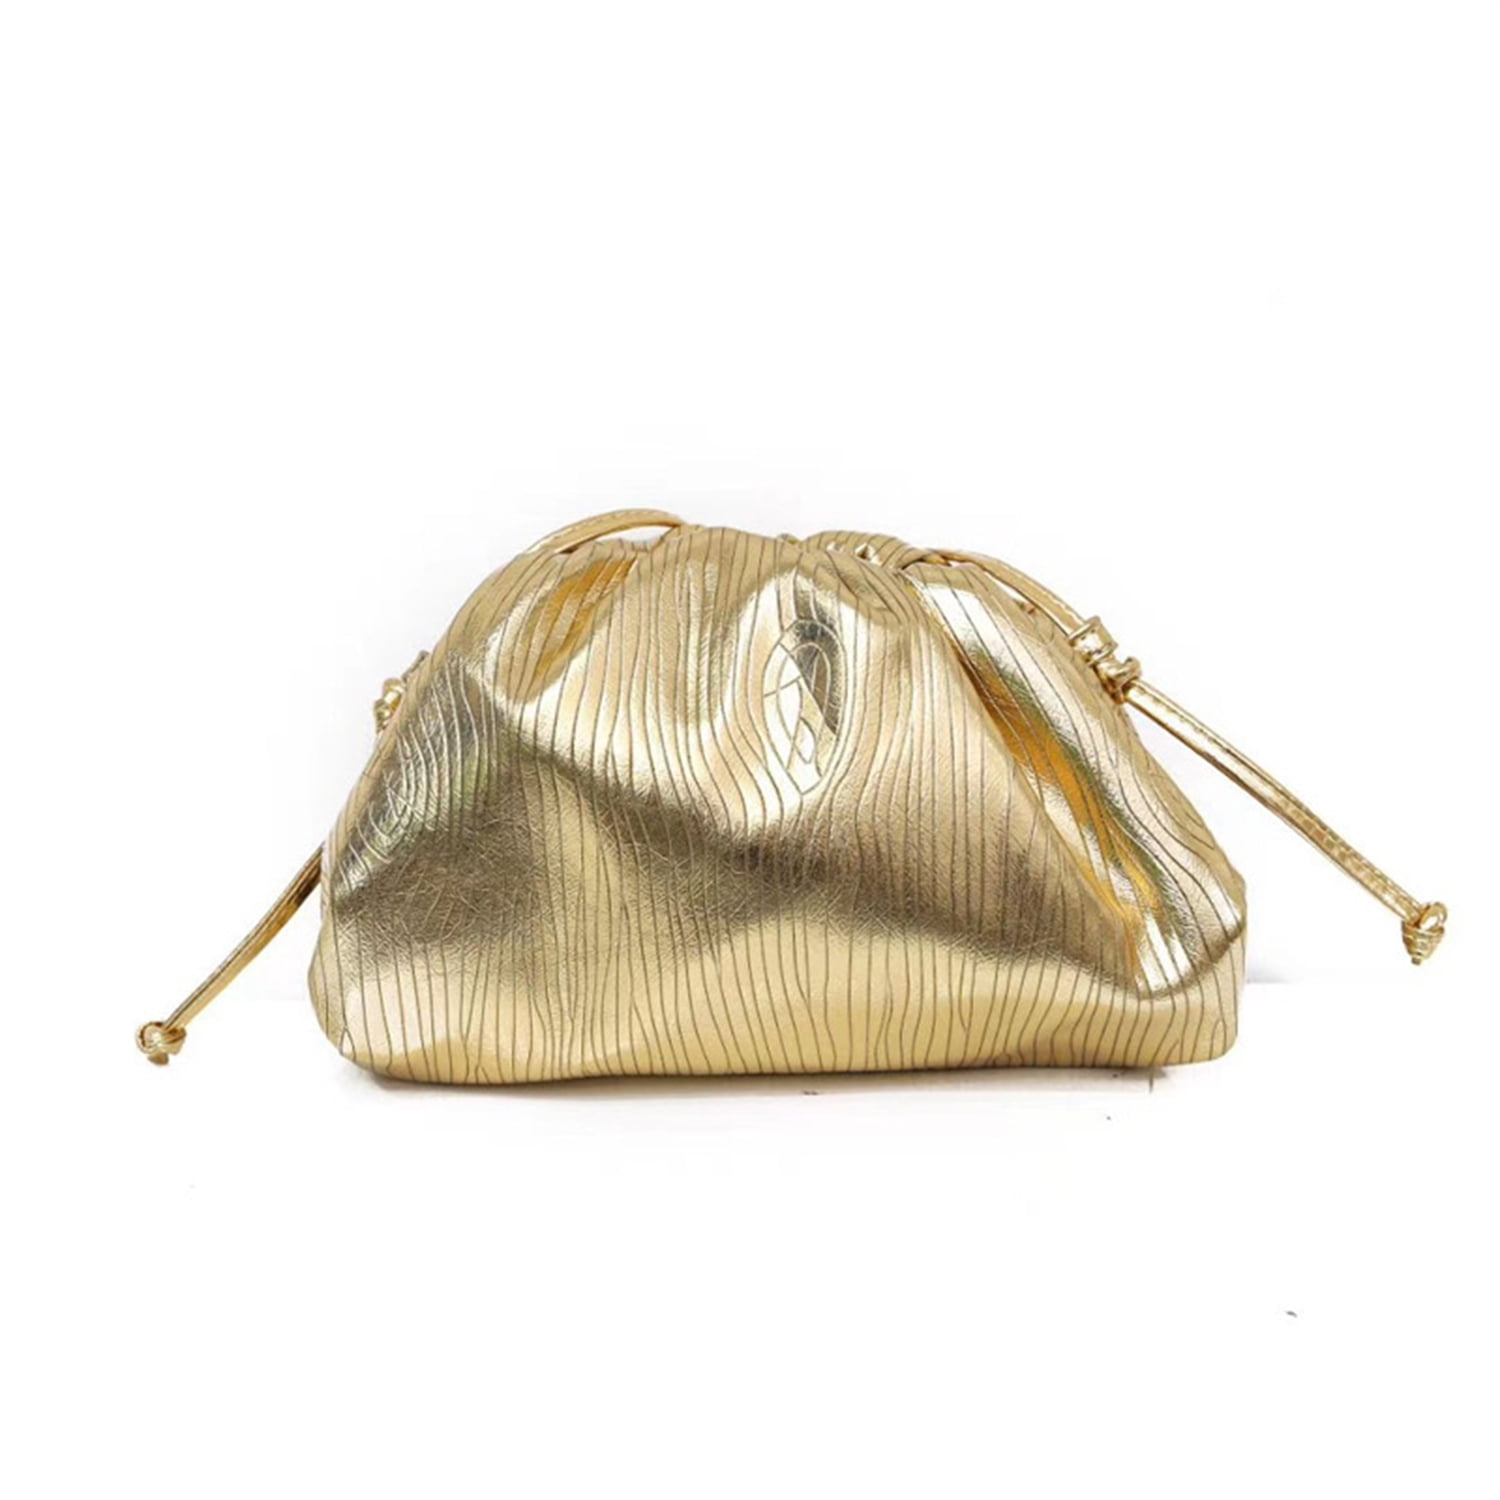 Small Metallic Glossy PU Leather Shoulder Bag Clutch Handbags for